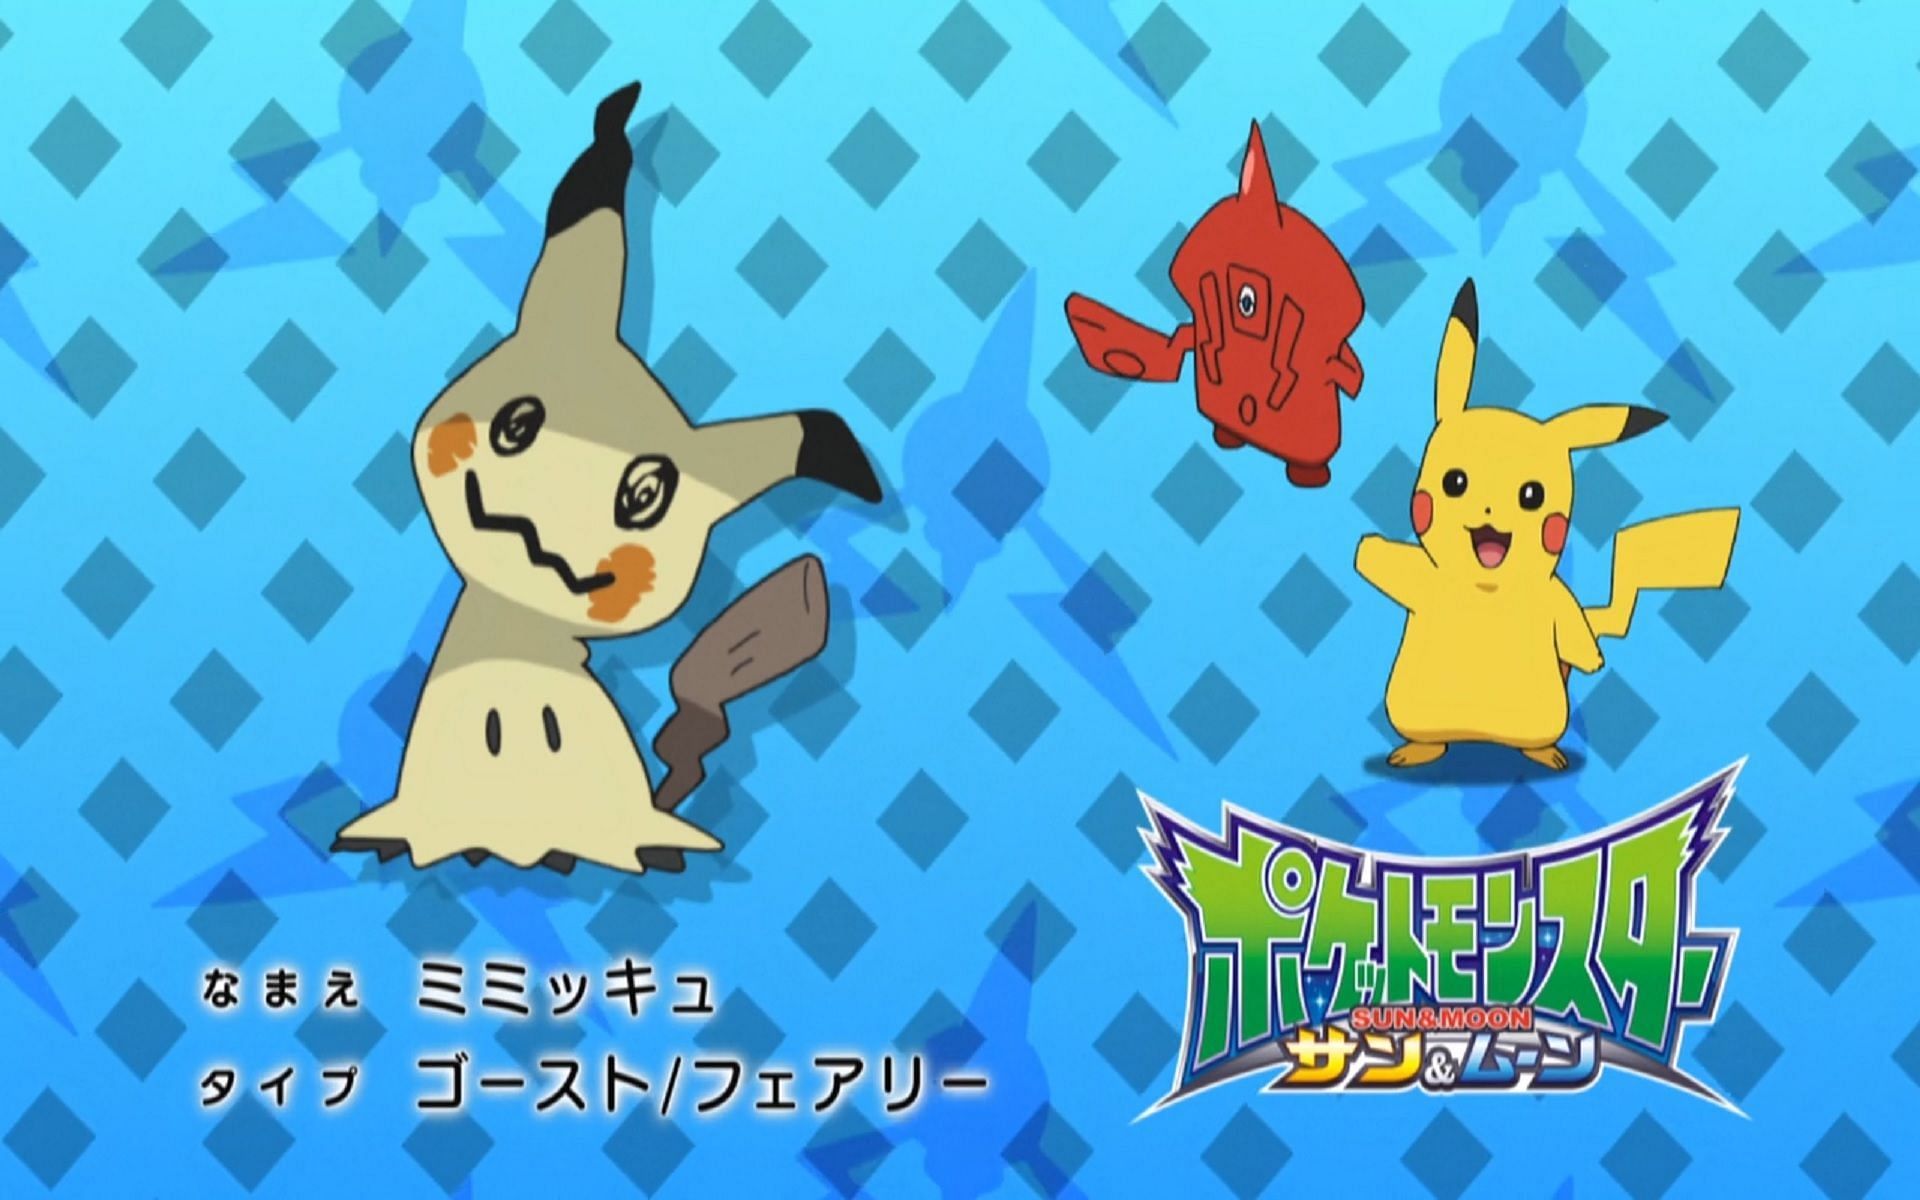 Mimikyu as seen in promotional art (Image via The Pokemon Company)